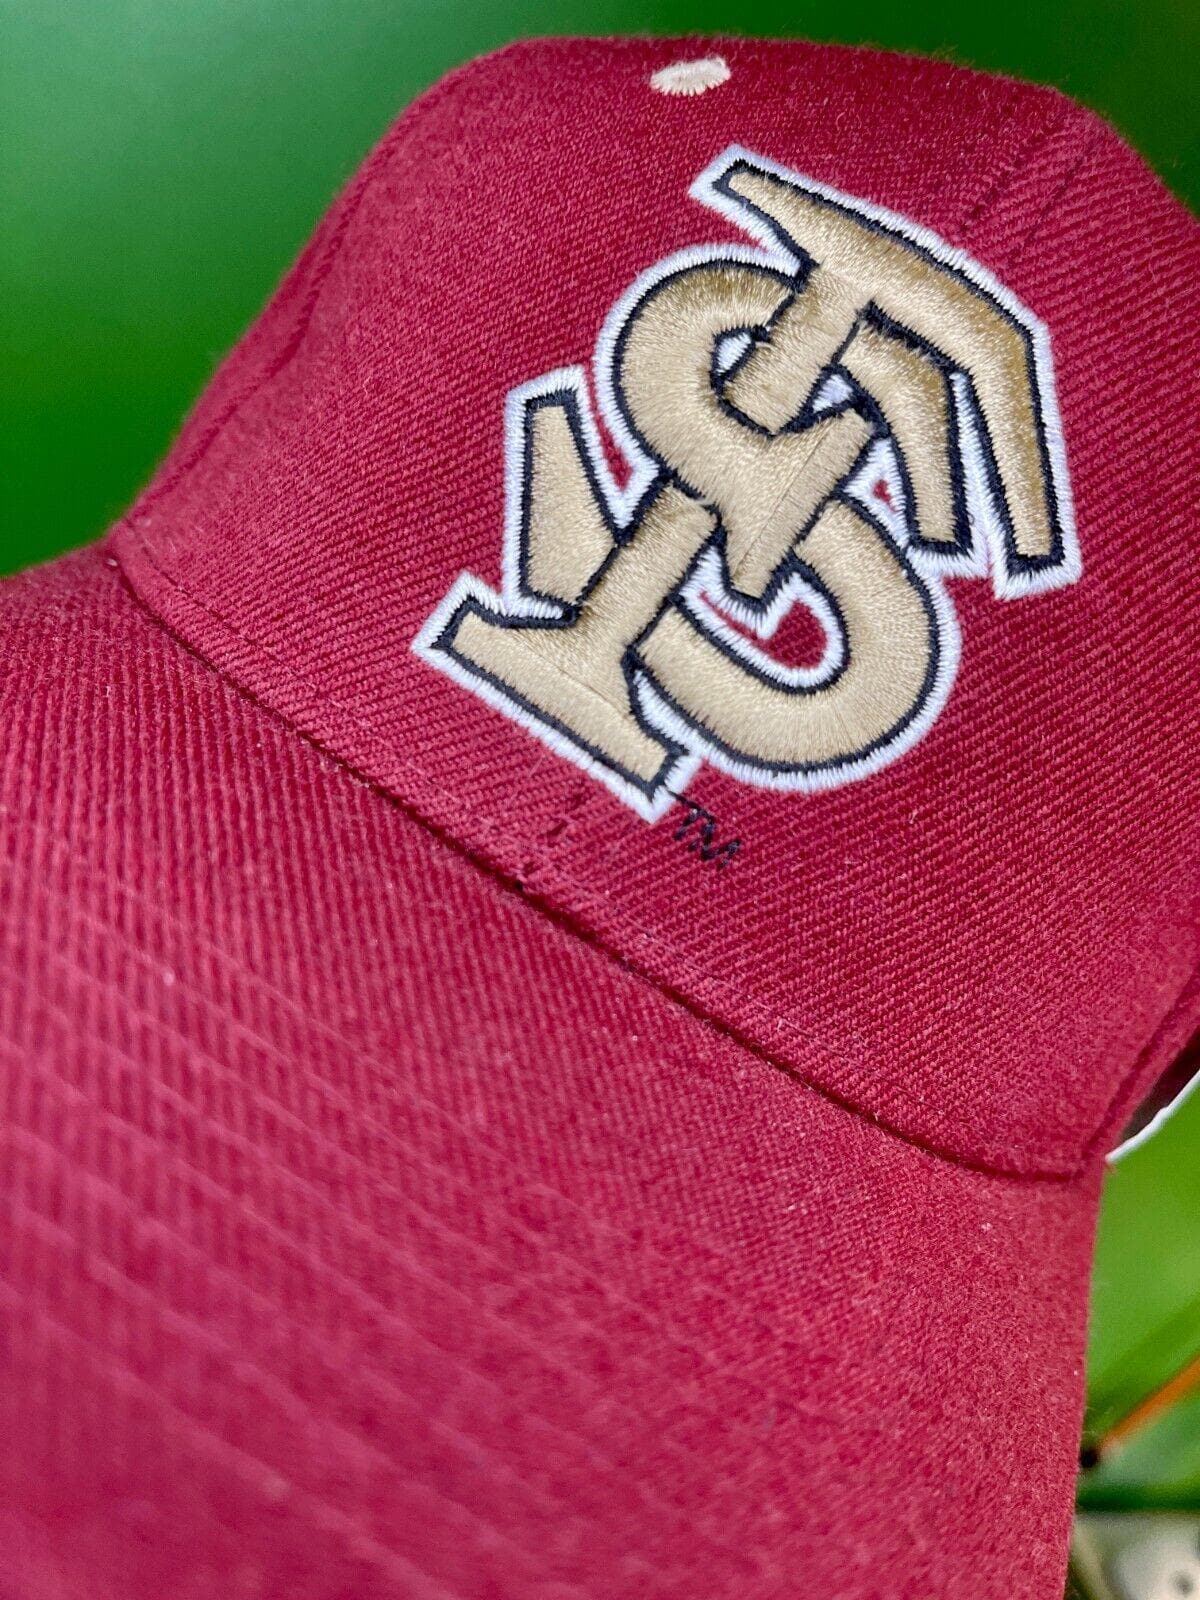 NCAA Florida State Seminoles Zephyr Hat/Cap Size 7 NWT